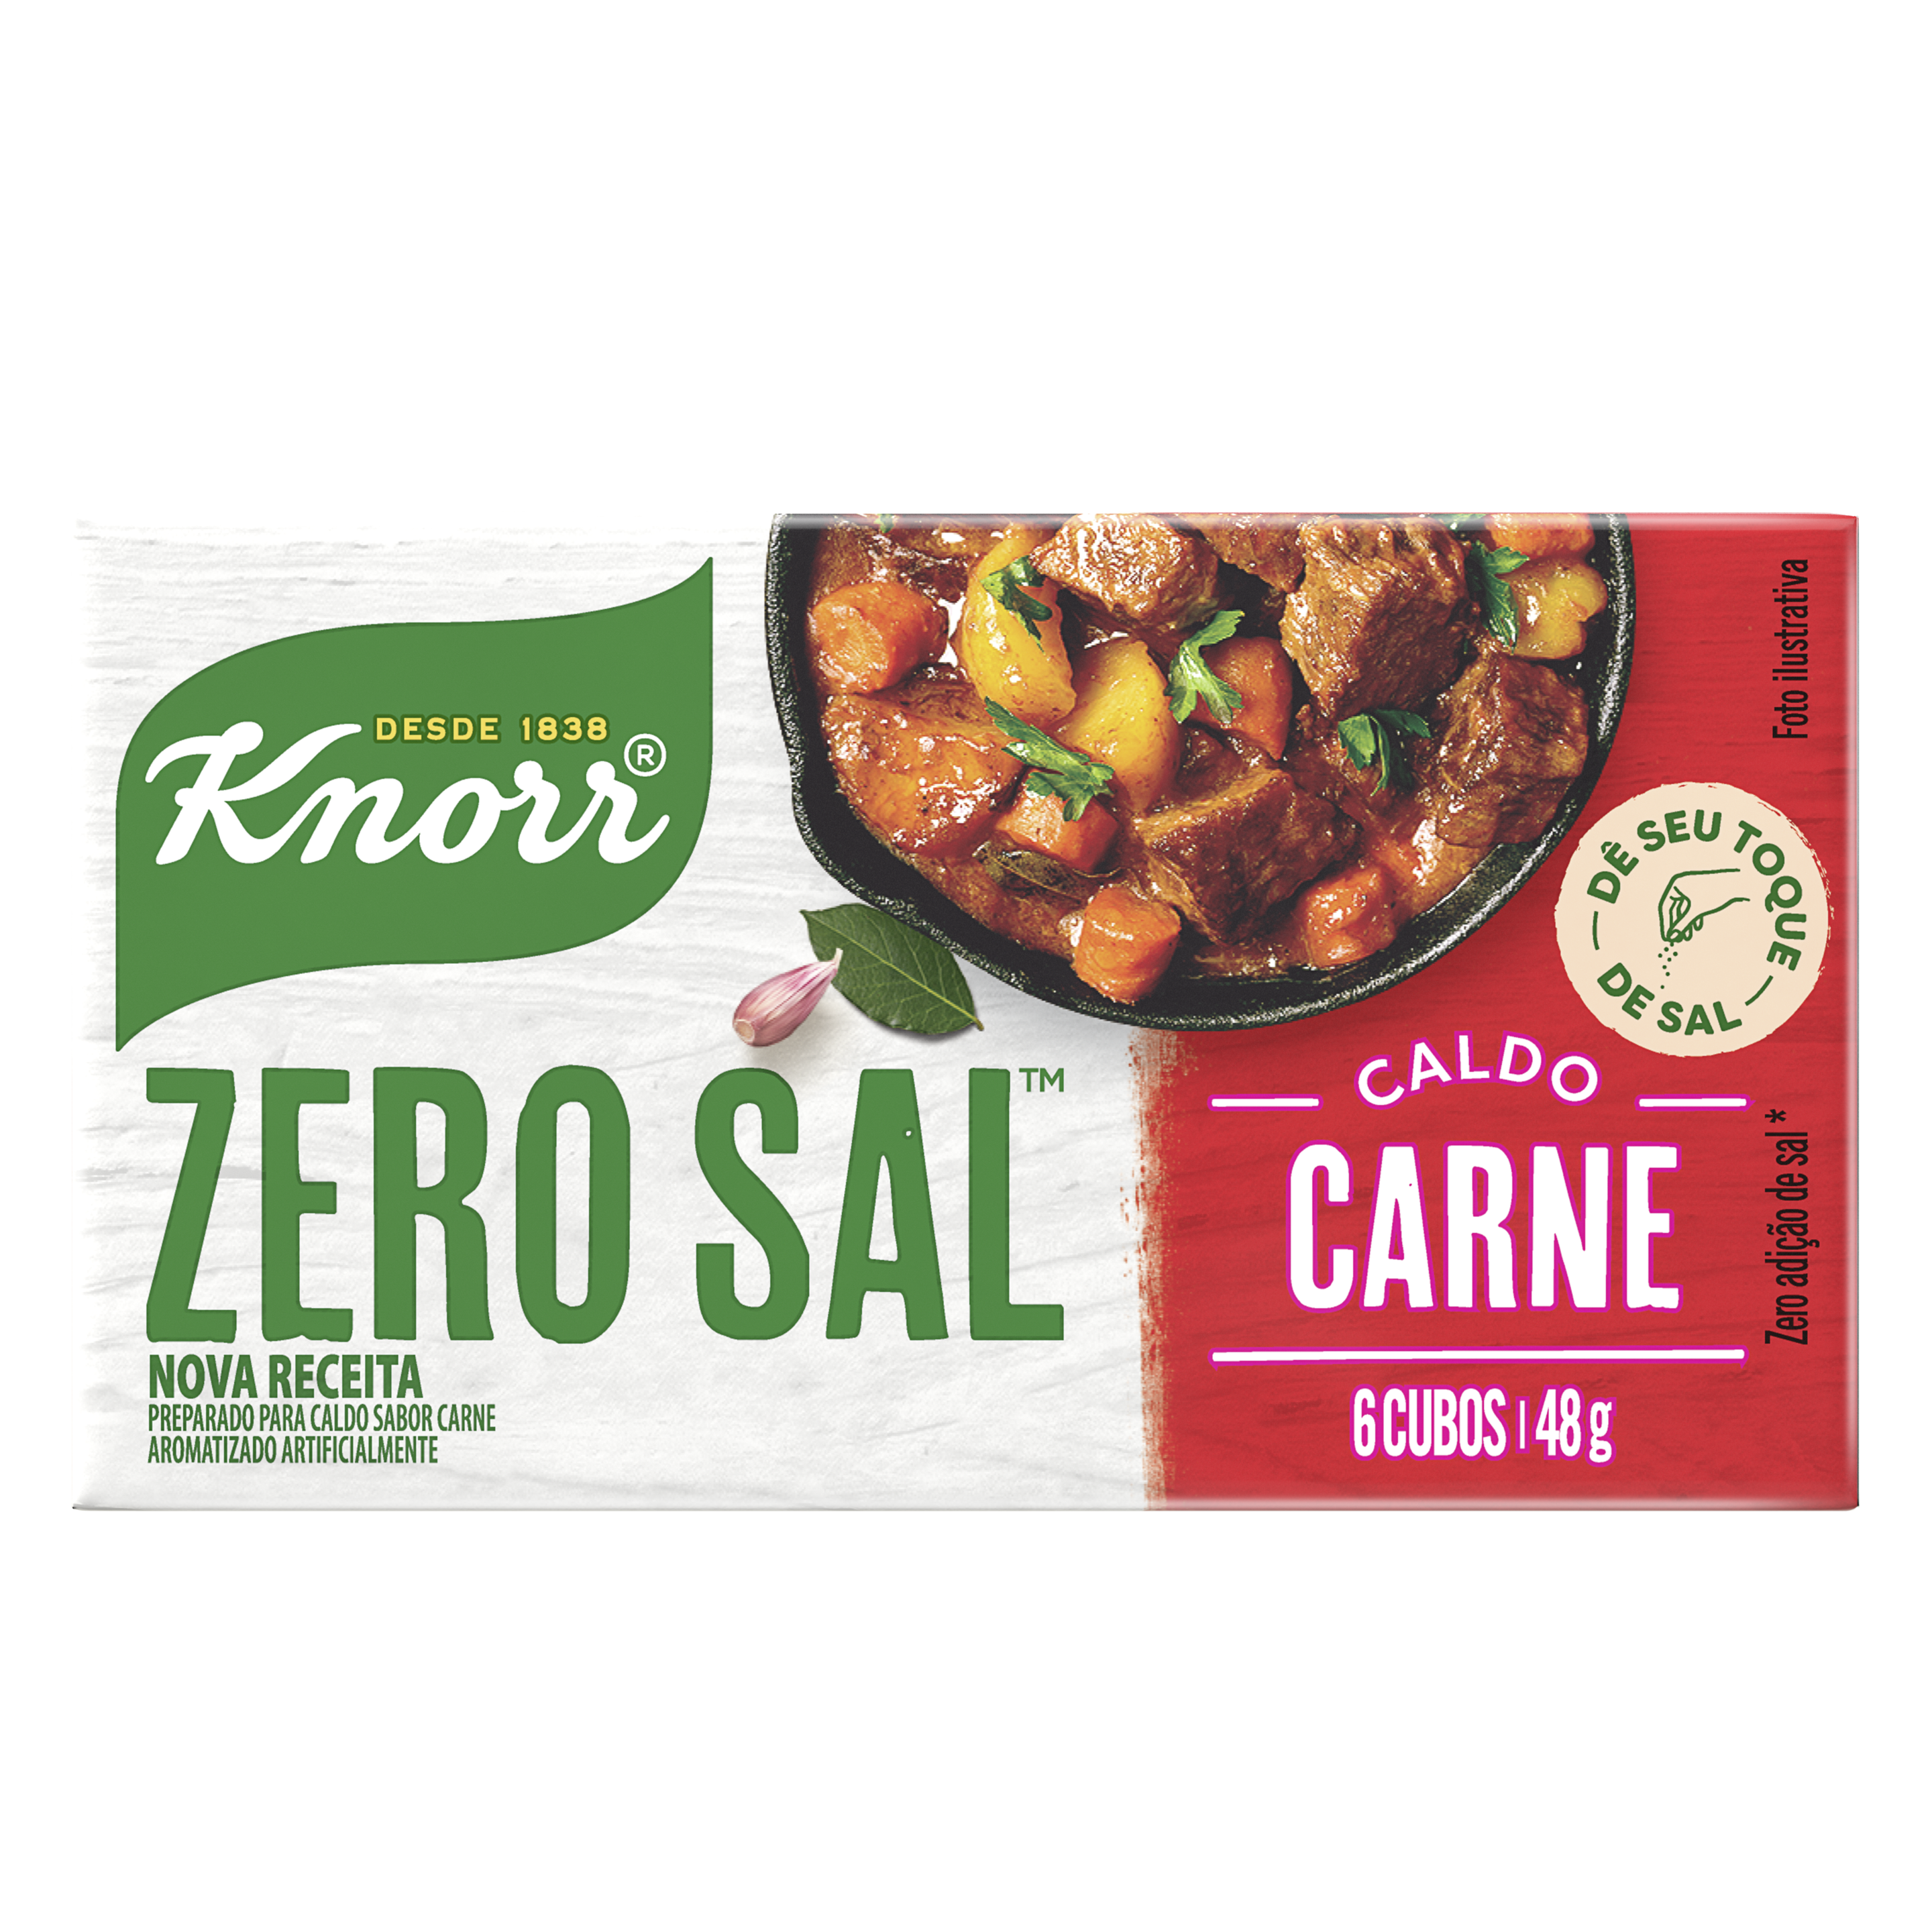 Caldo Knorr Zero Sal™ Carne